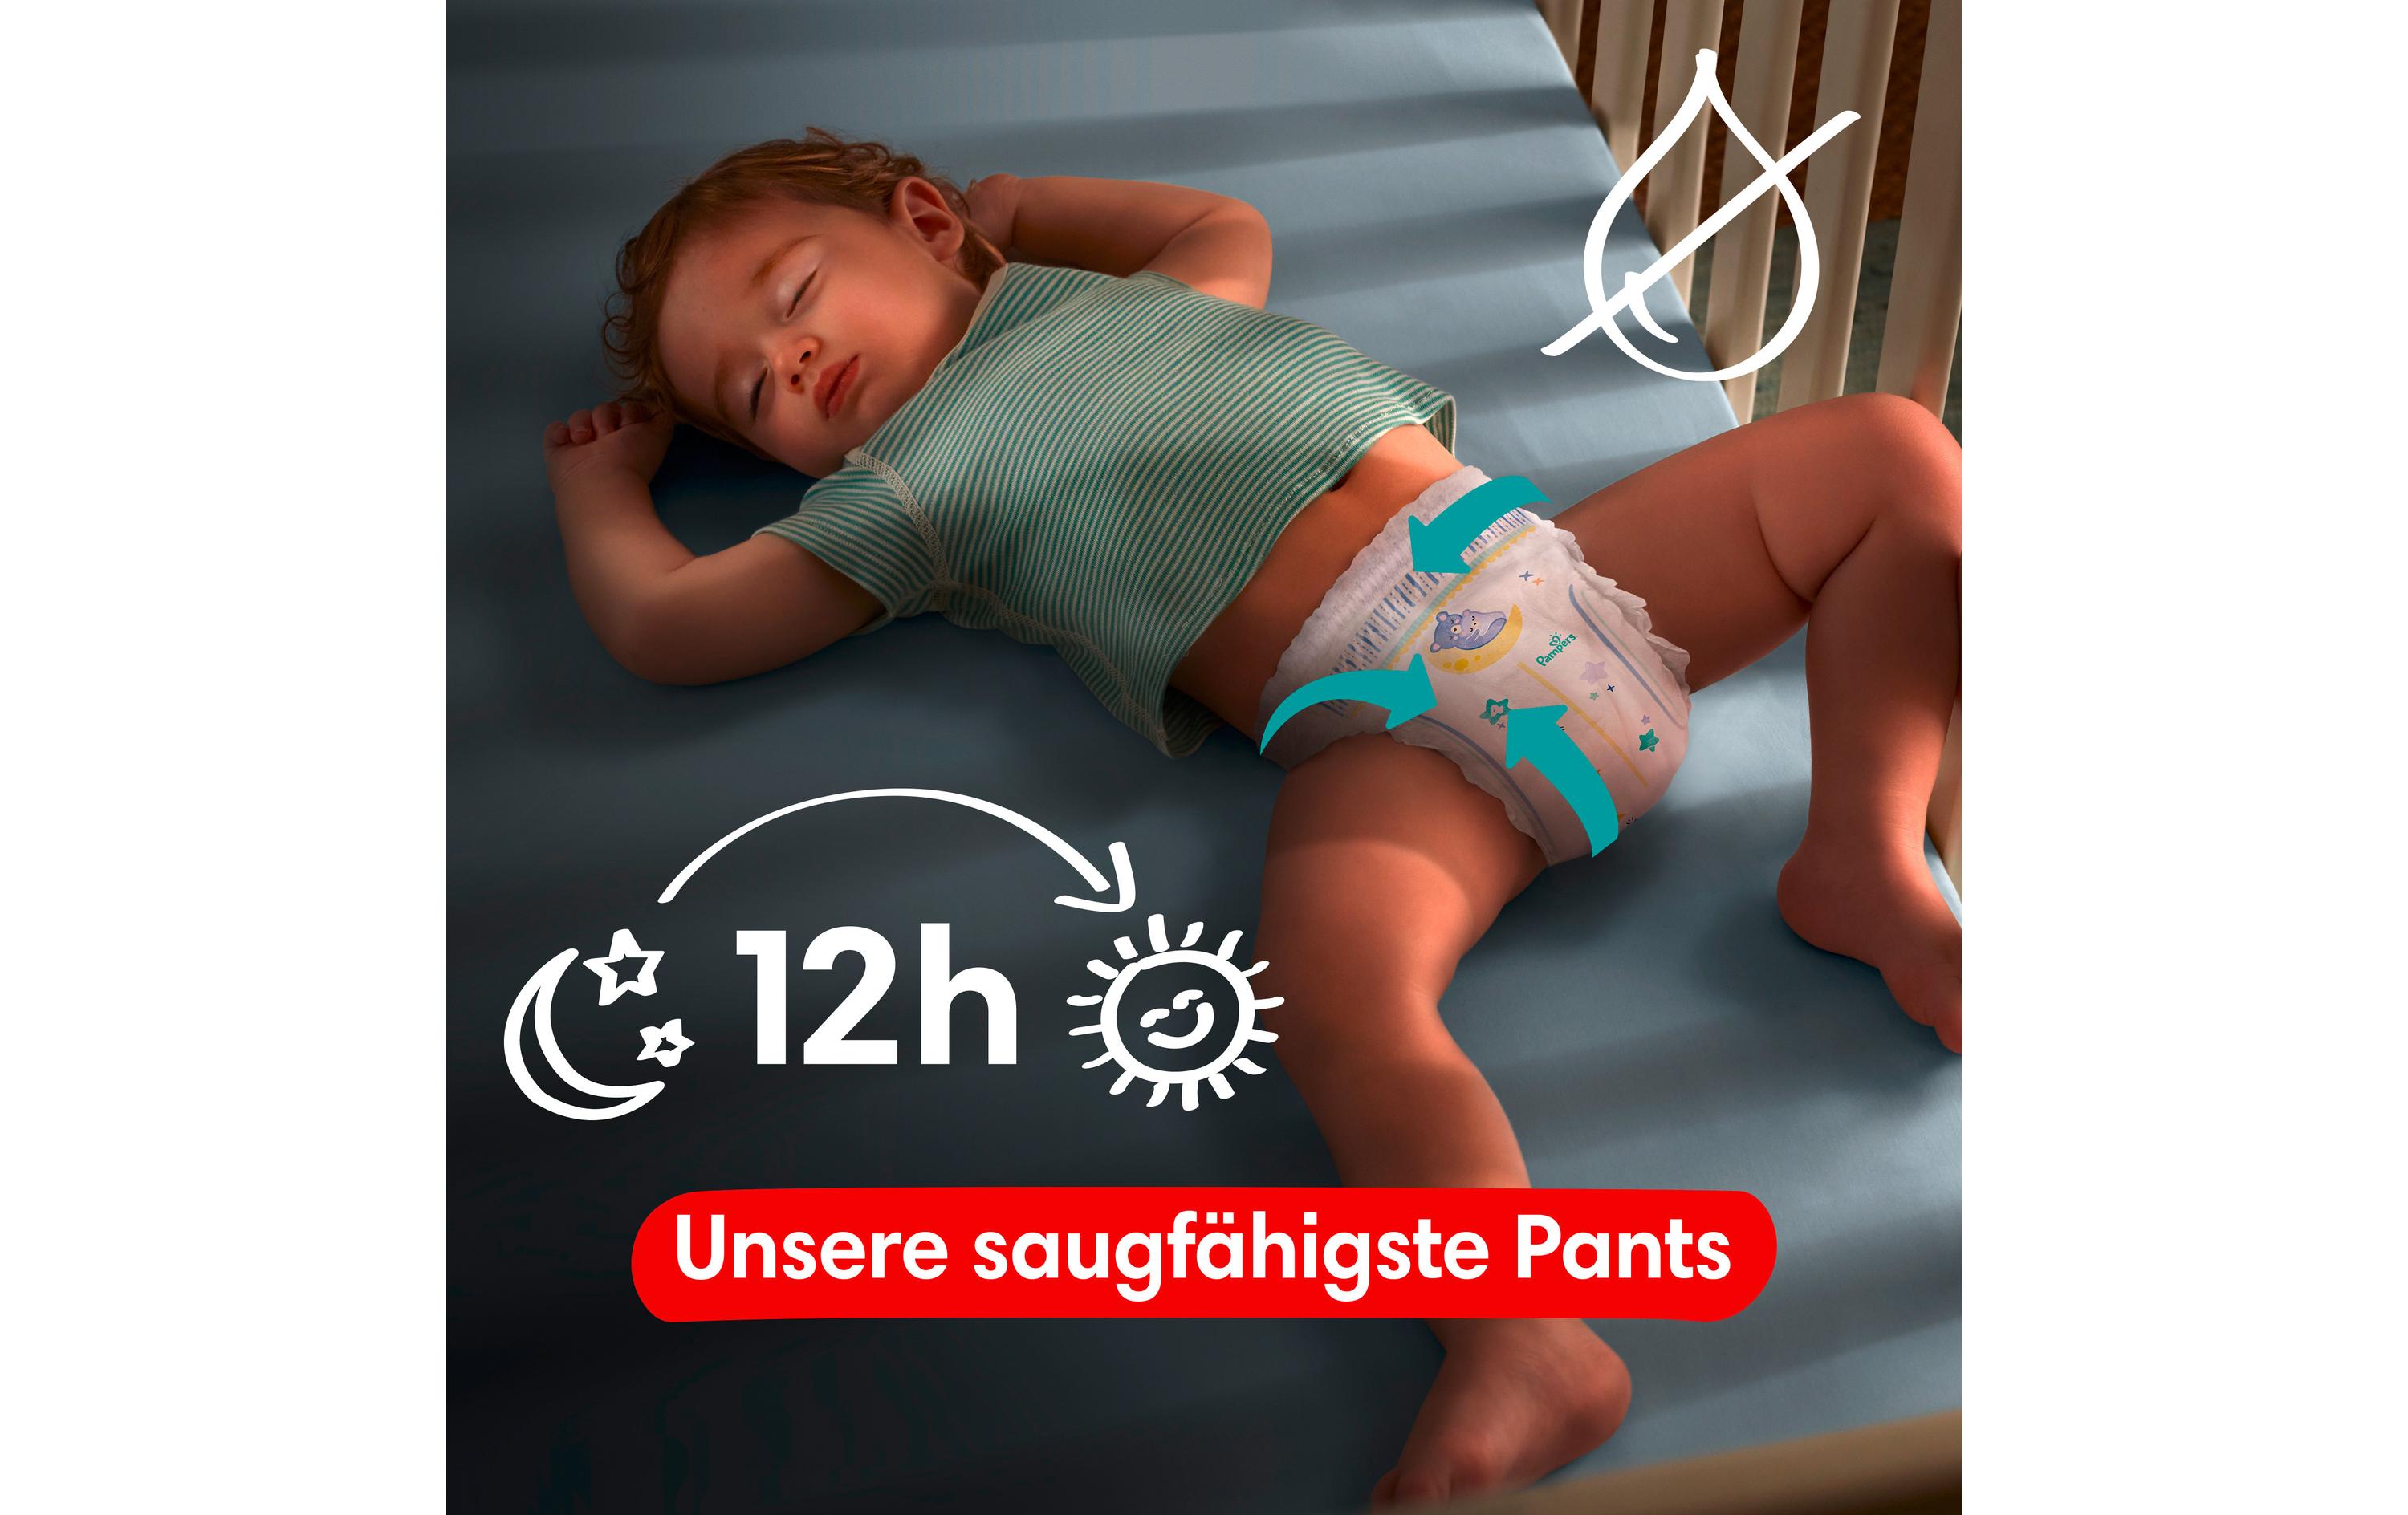 Pampers Nachtwindeln Baby Dry Night Pants Grösse 5